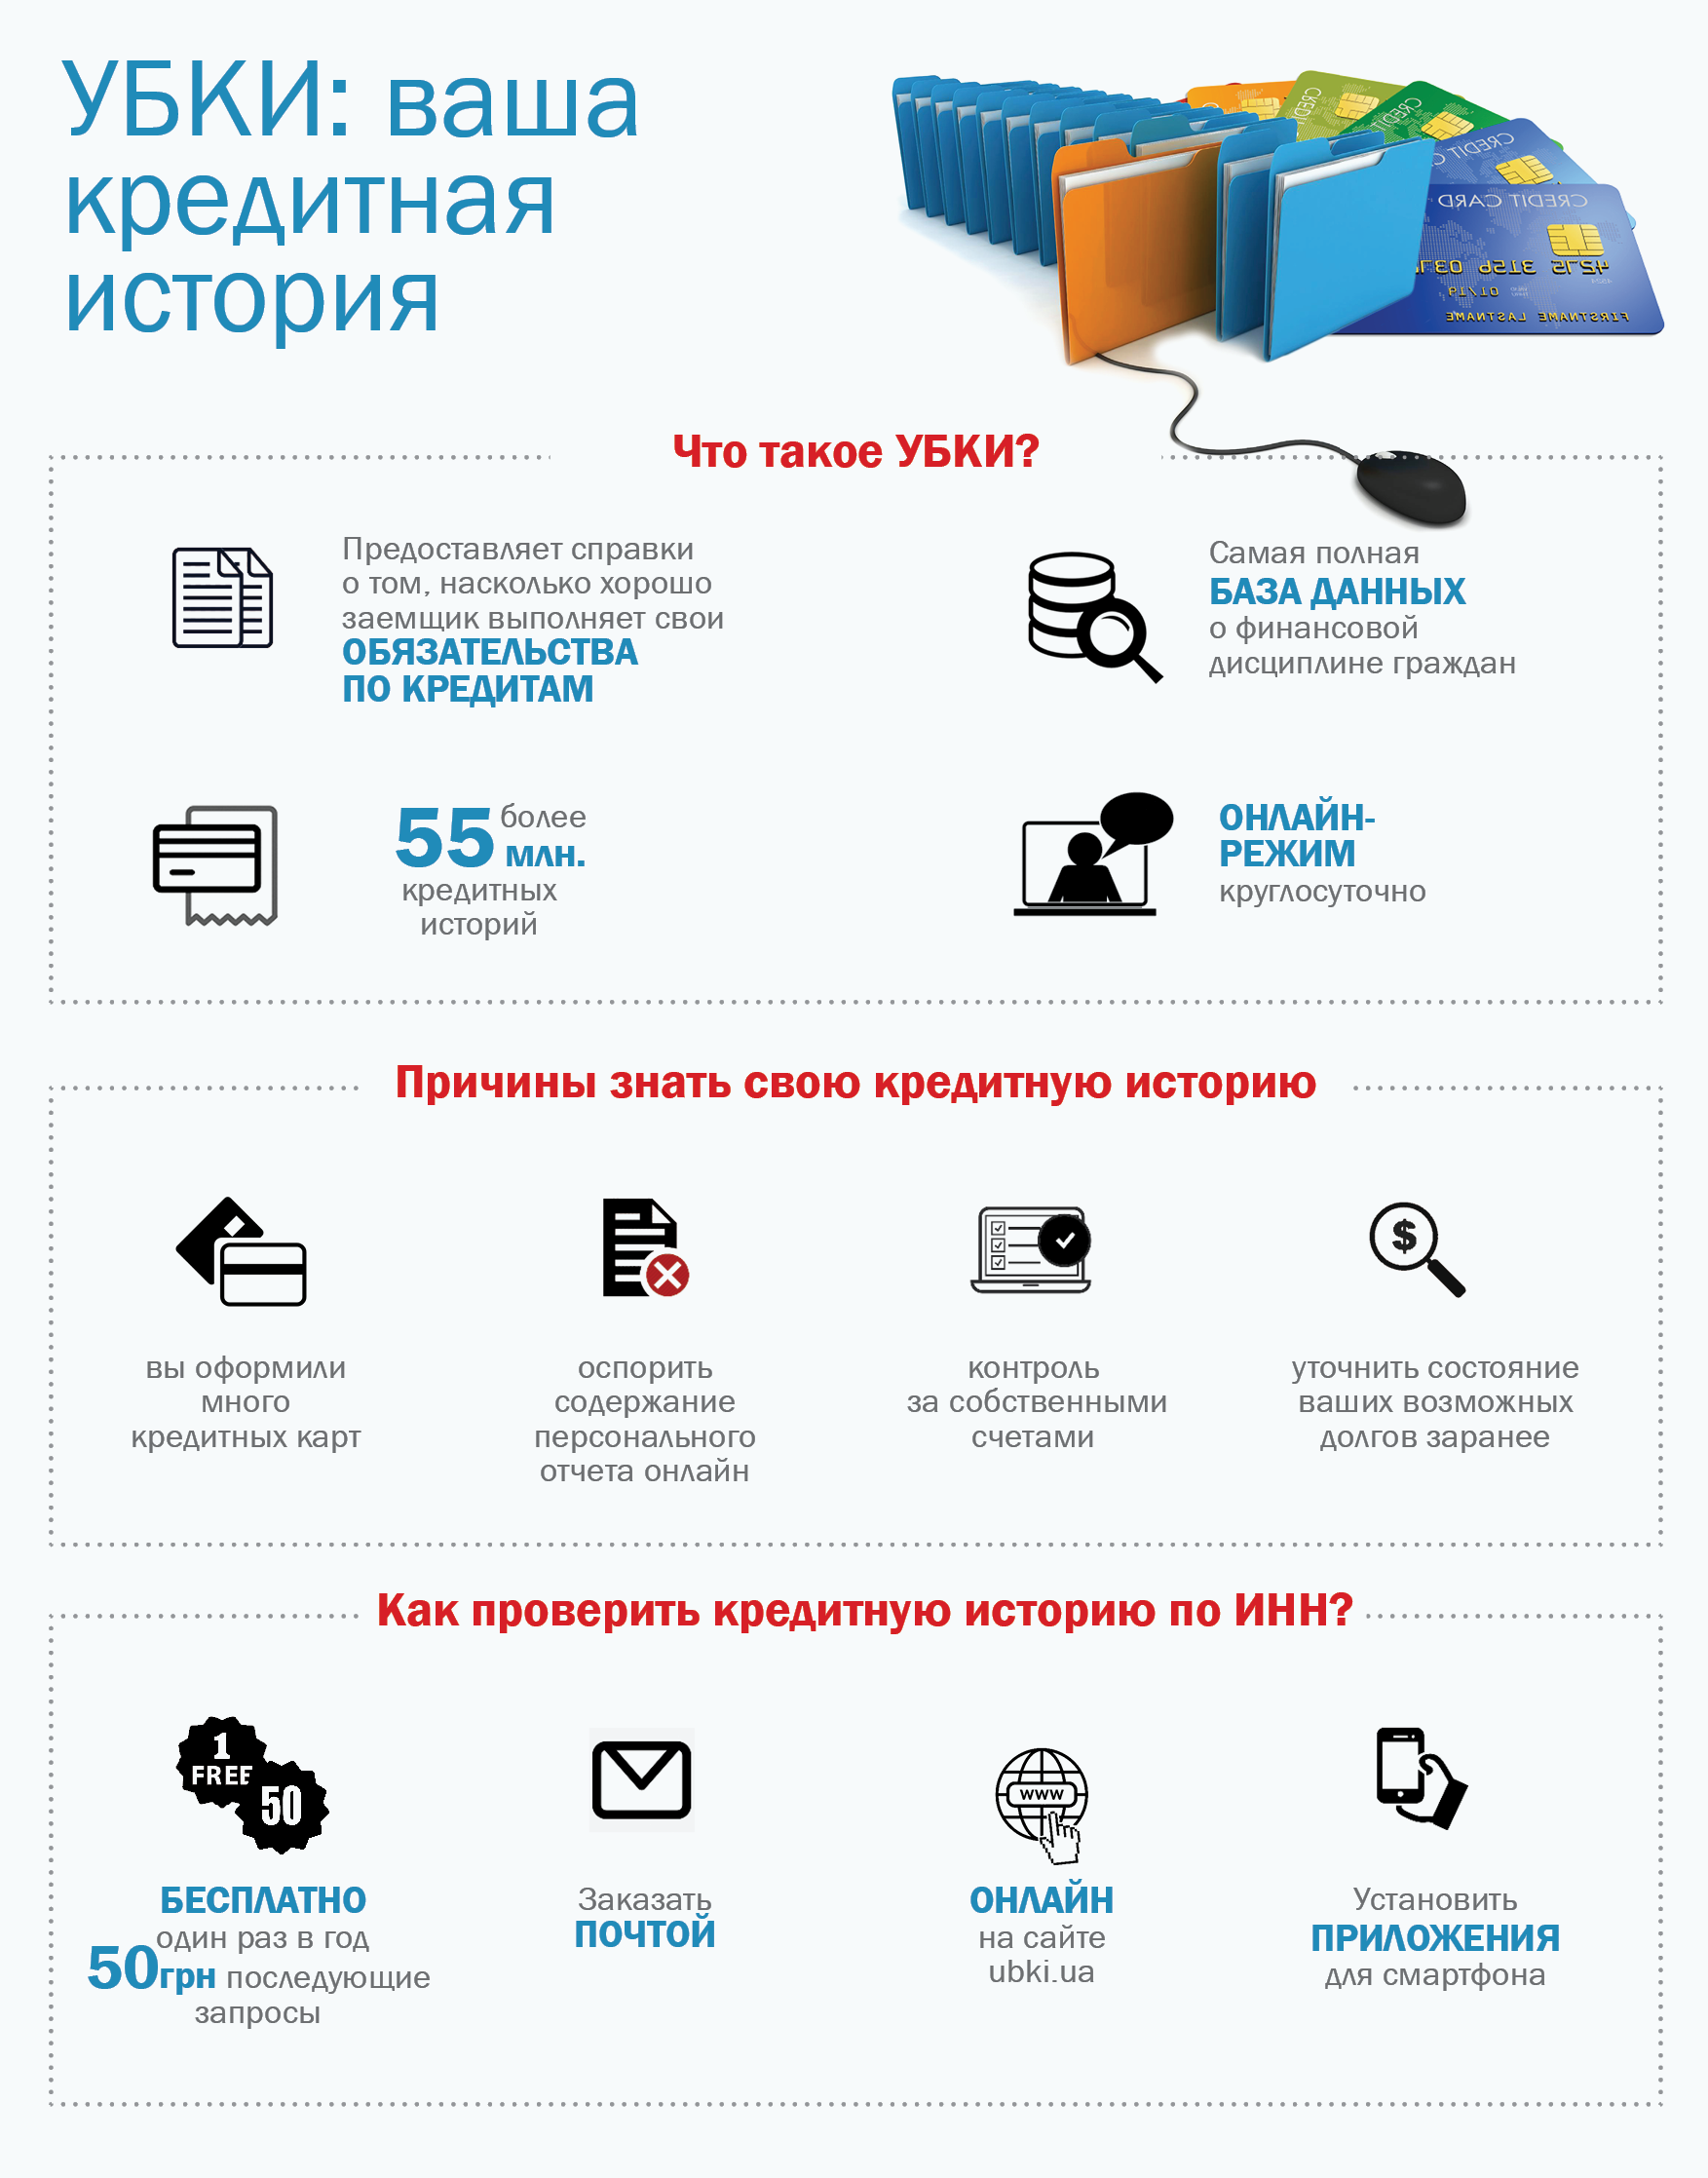 Инфографика УБКИ